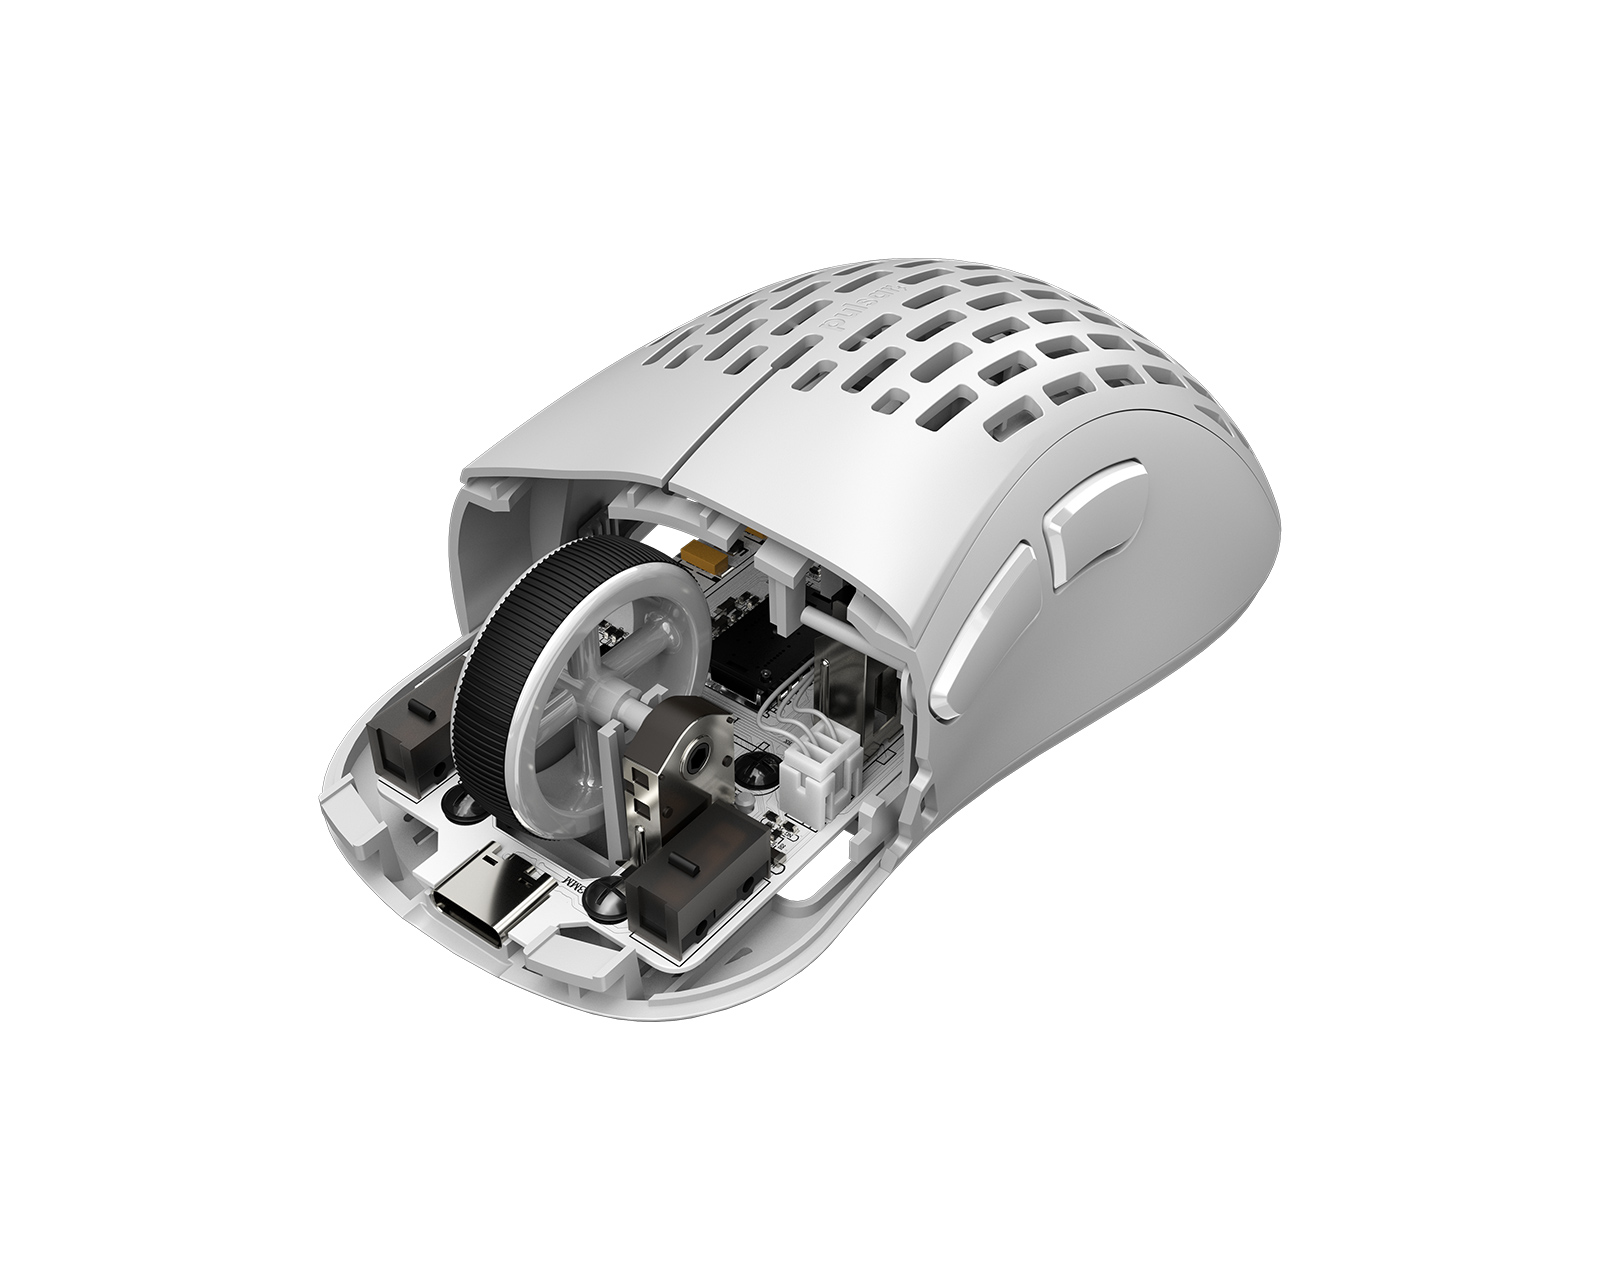 Pulsar Xlite Wireless v2 Mini Gaming Mouse - White - MaxGaming.com